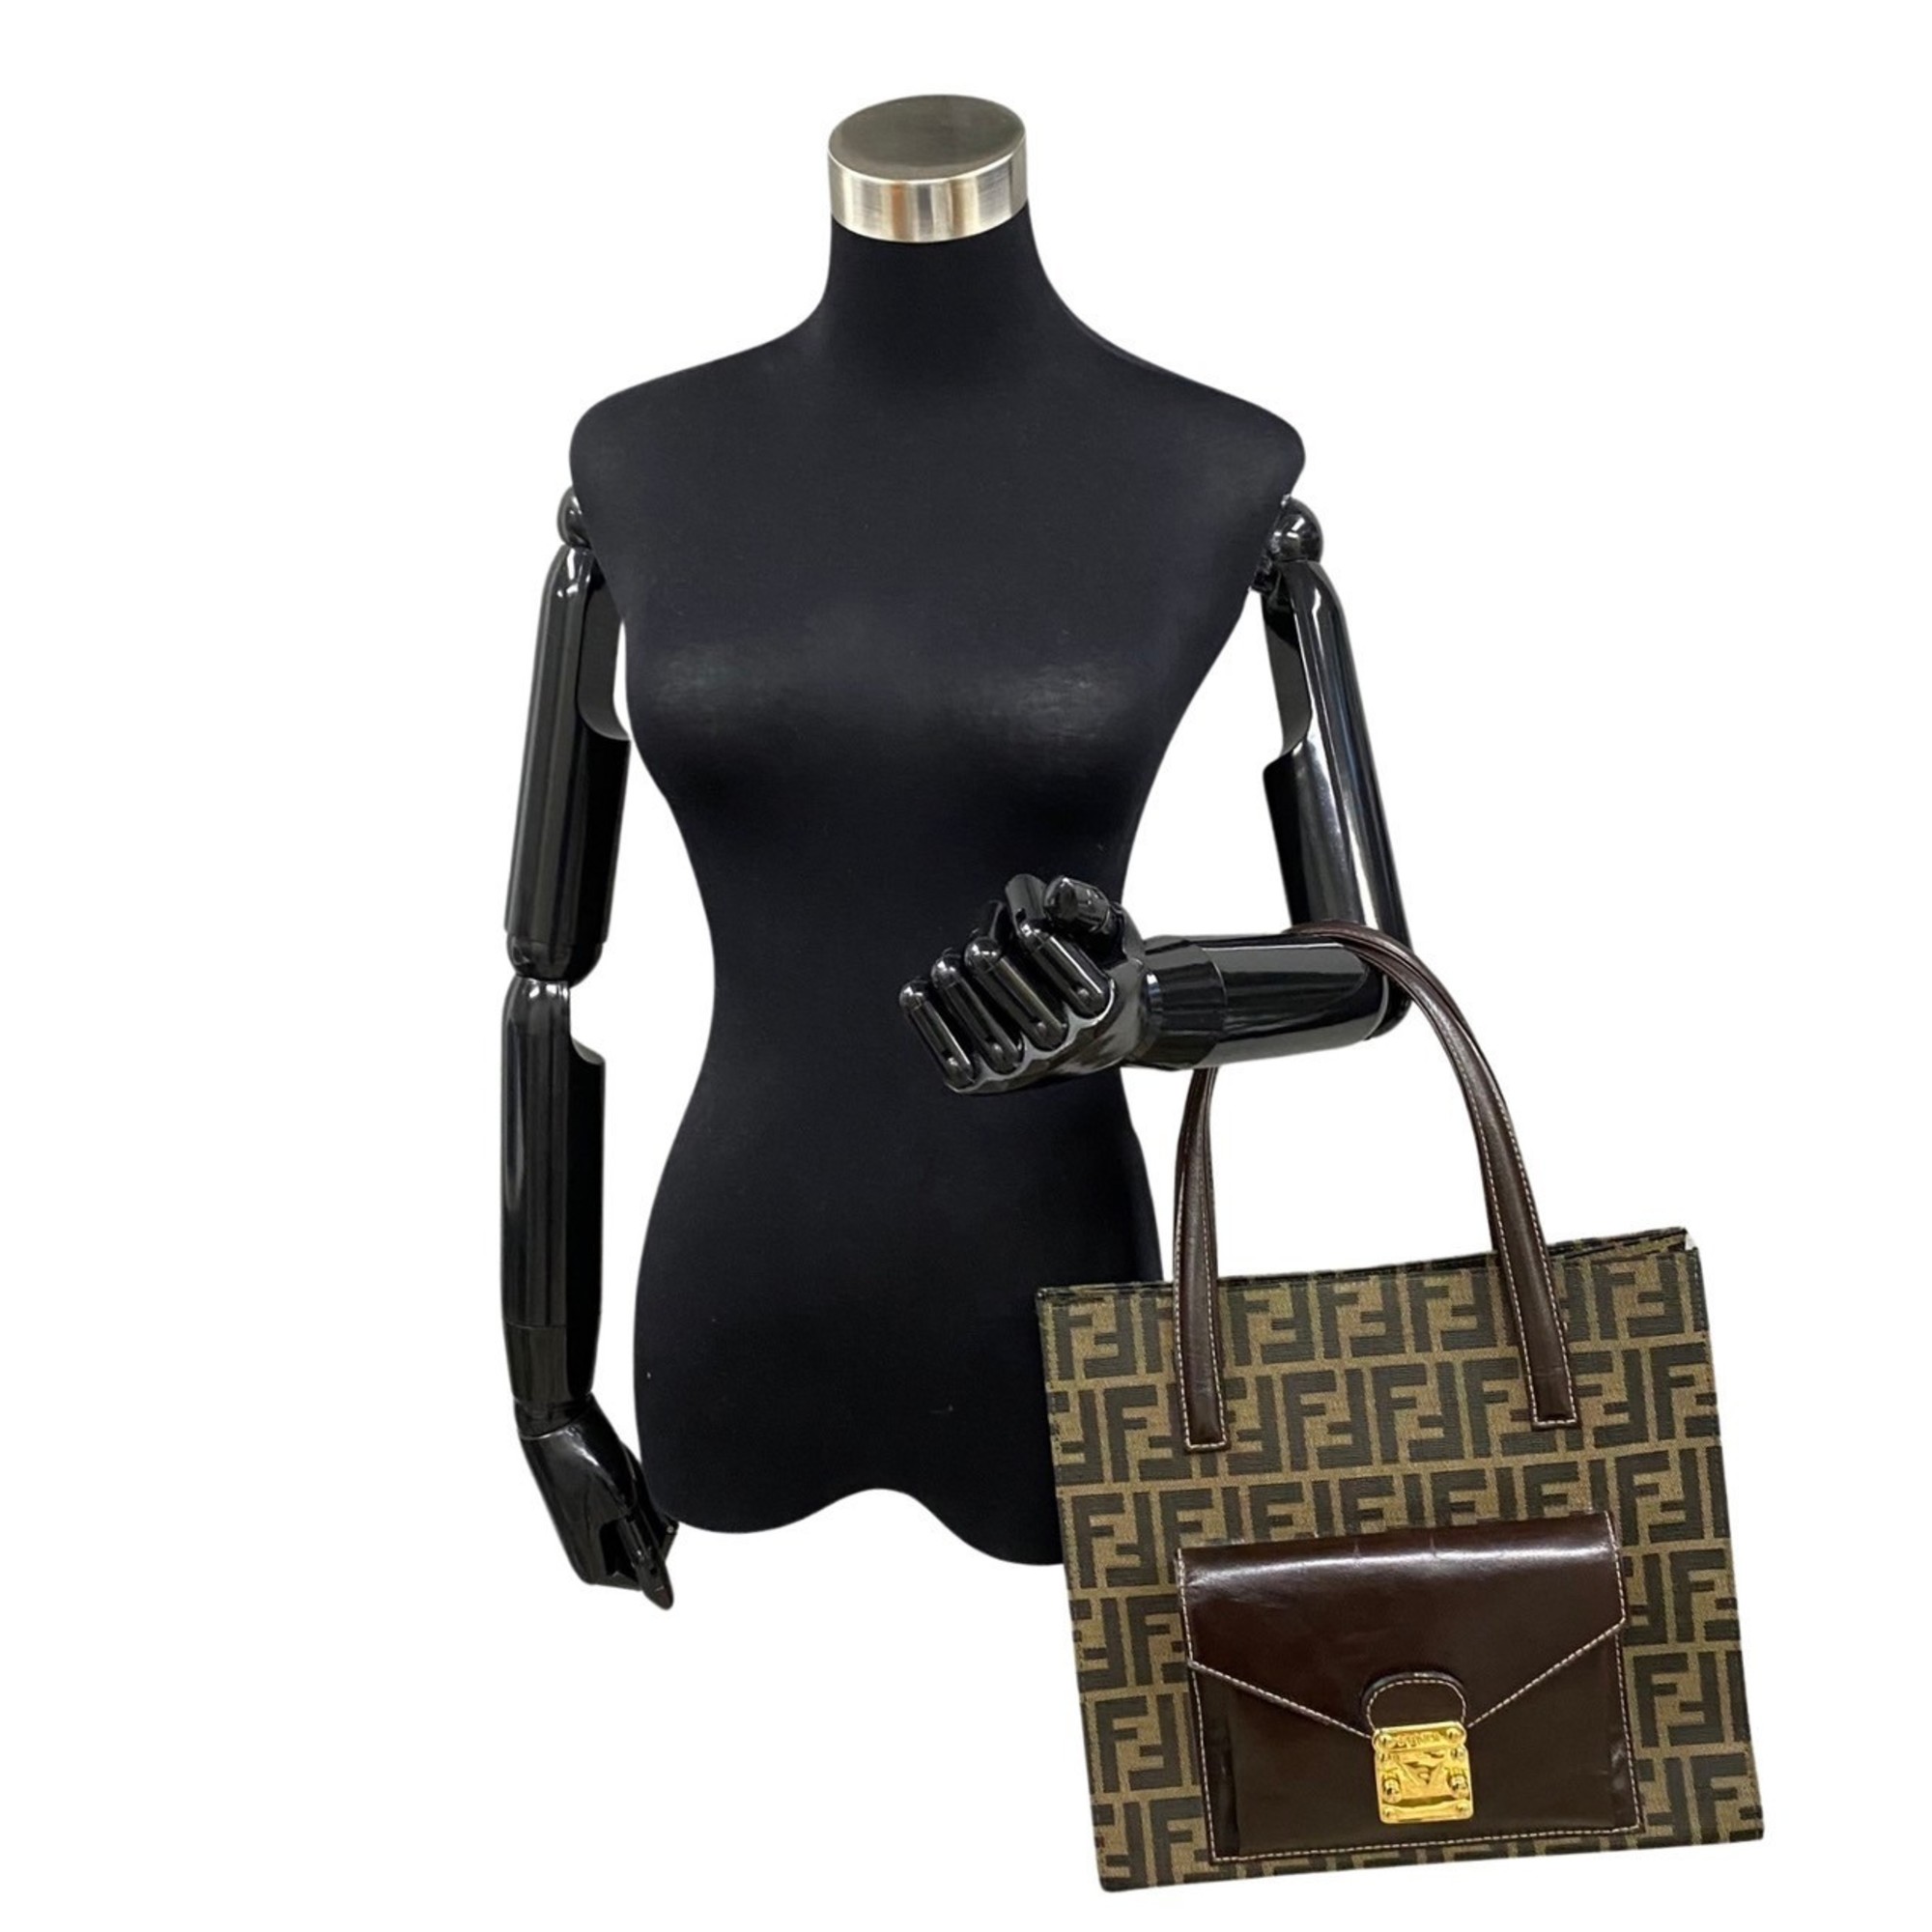 FENDI Zucca FF Hardware Leather Canvas Handbag Tote Bag Brown Khaki 28225